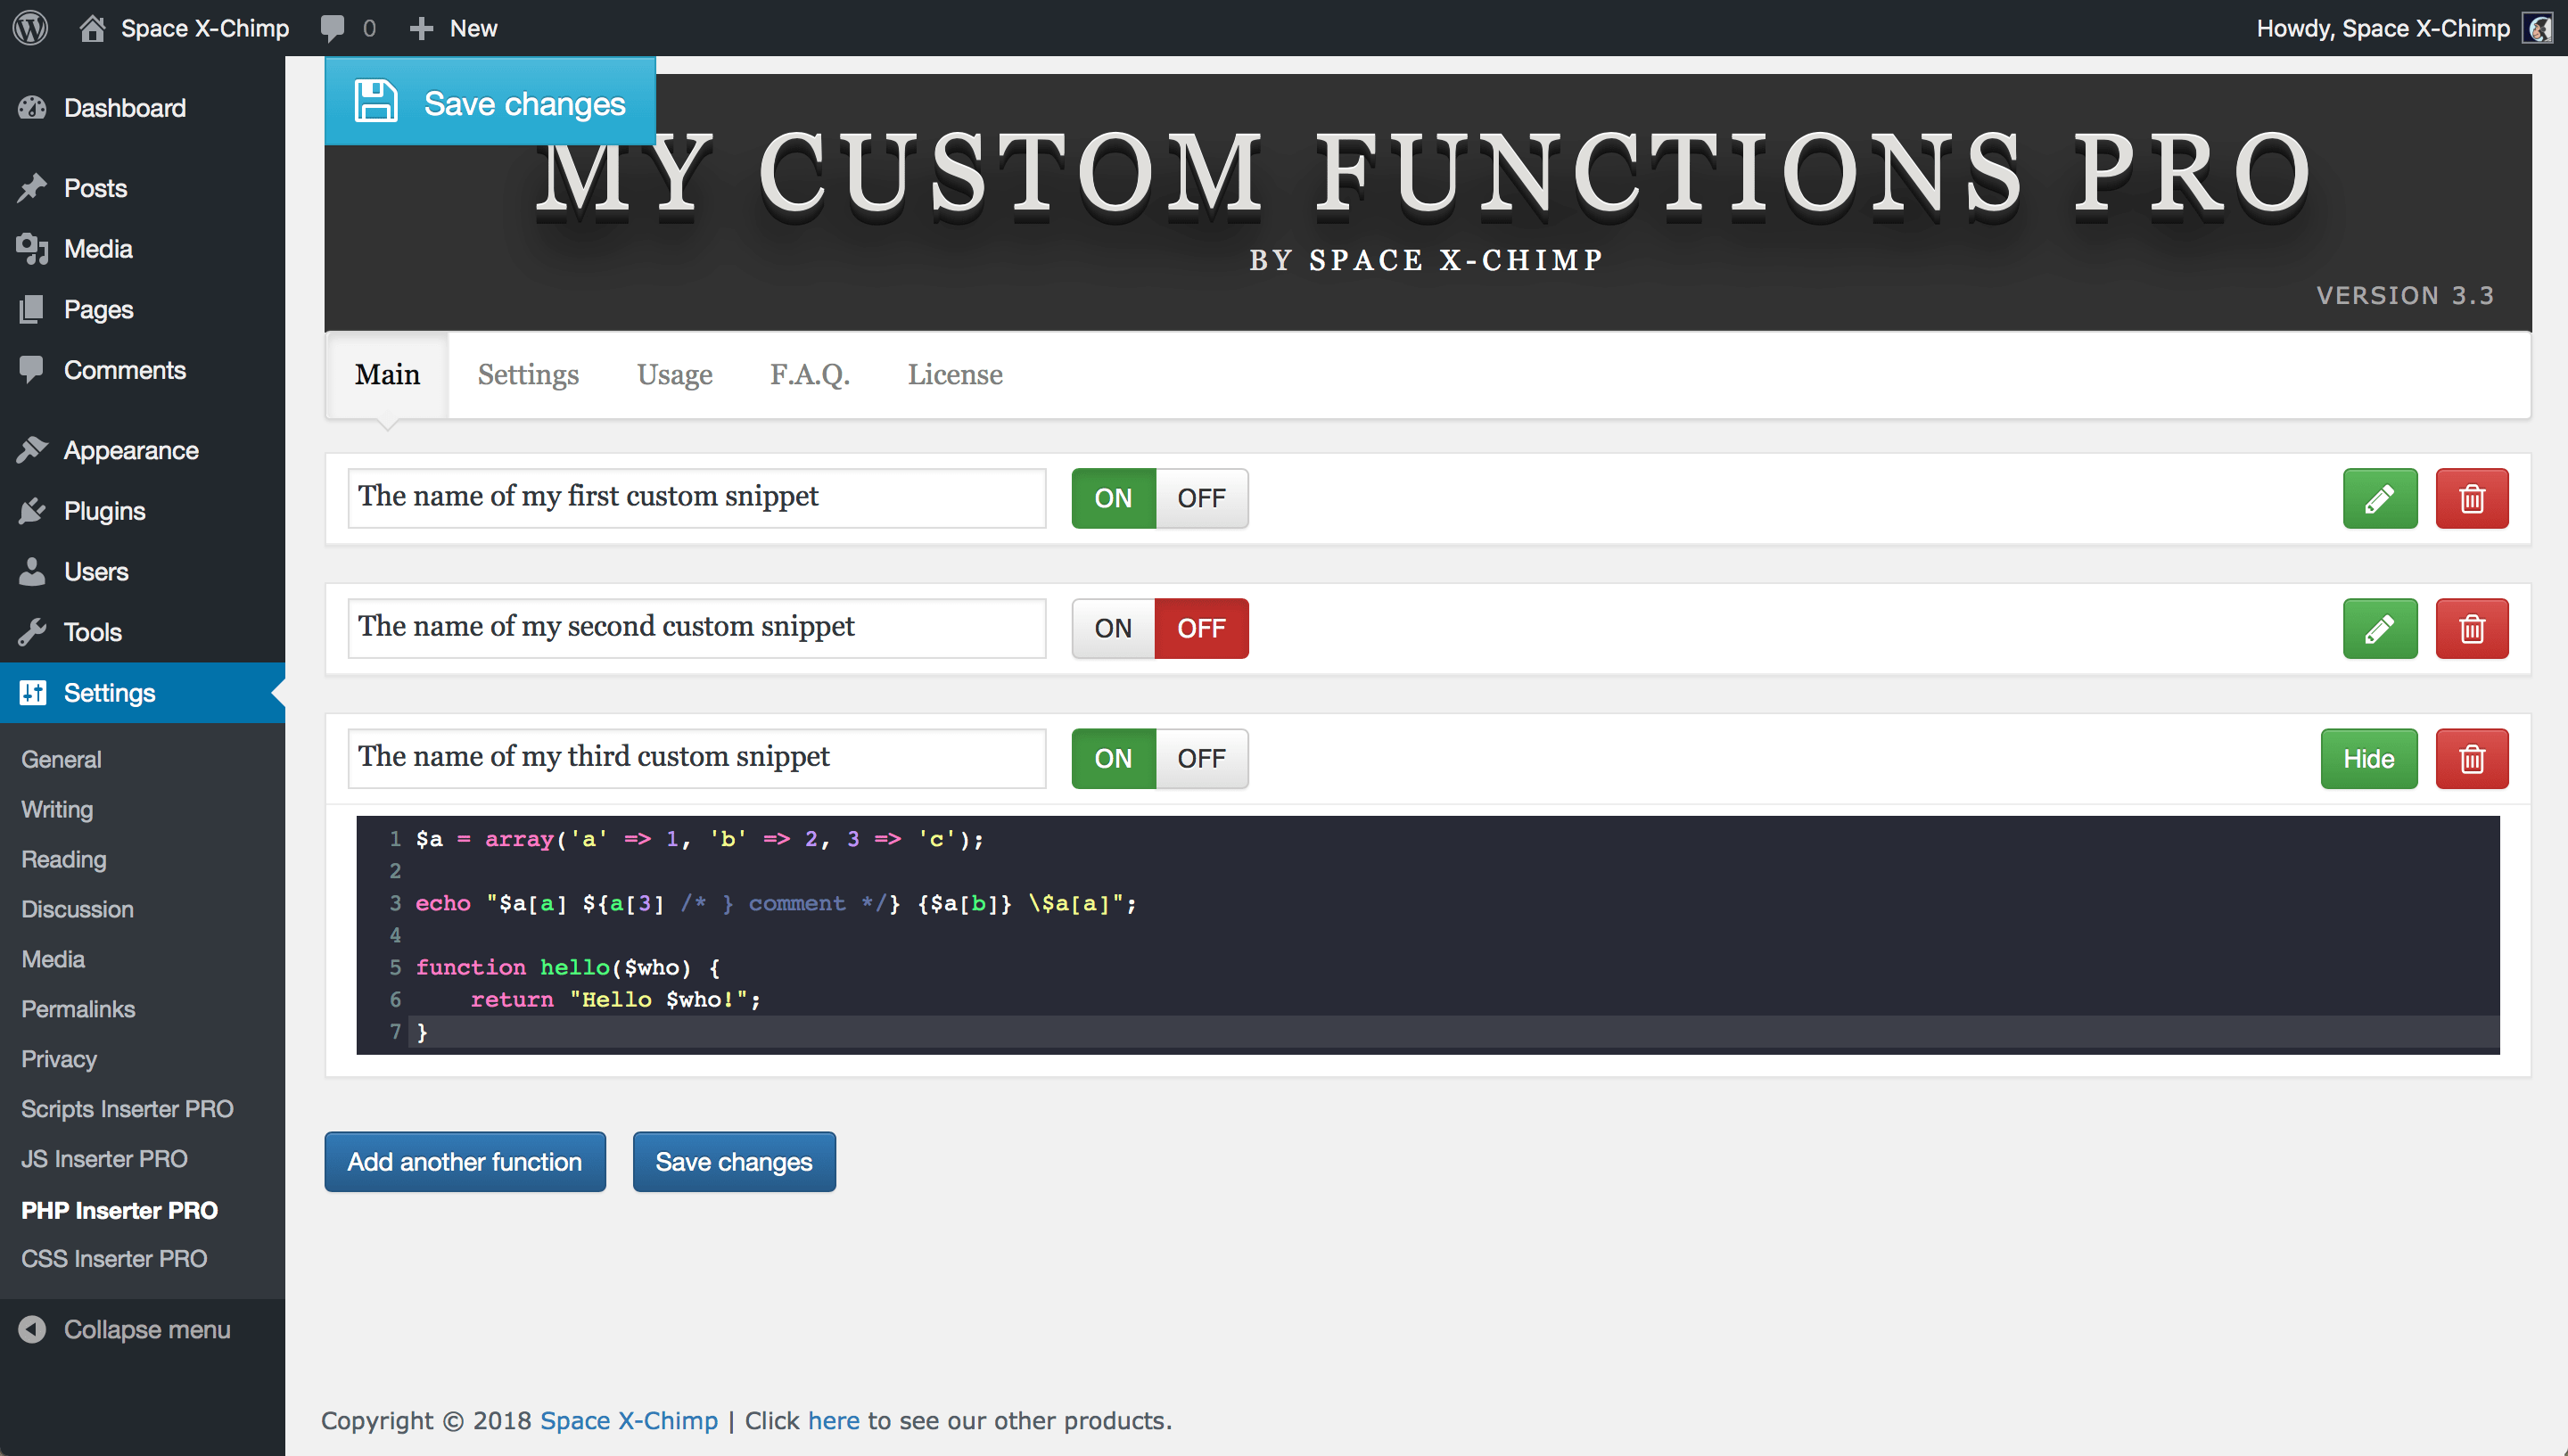 My Custom Functions PRO